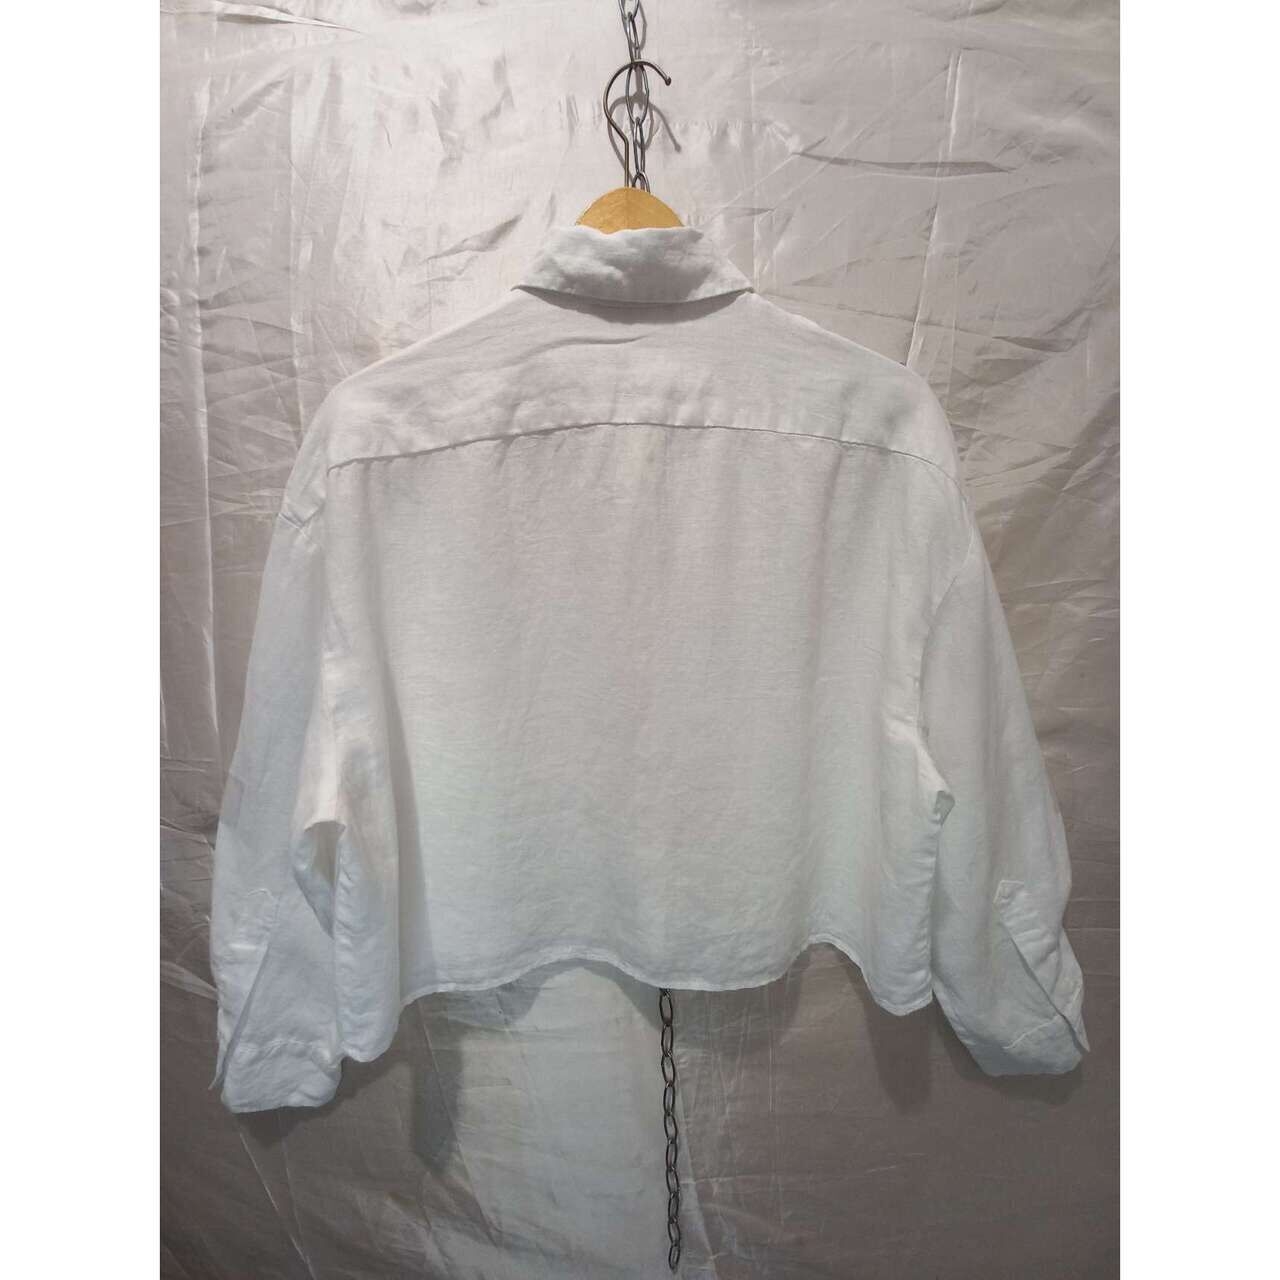 Zara White Cropped Shirt